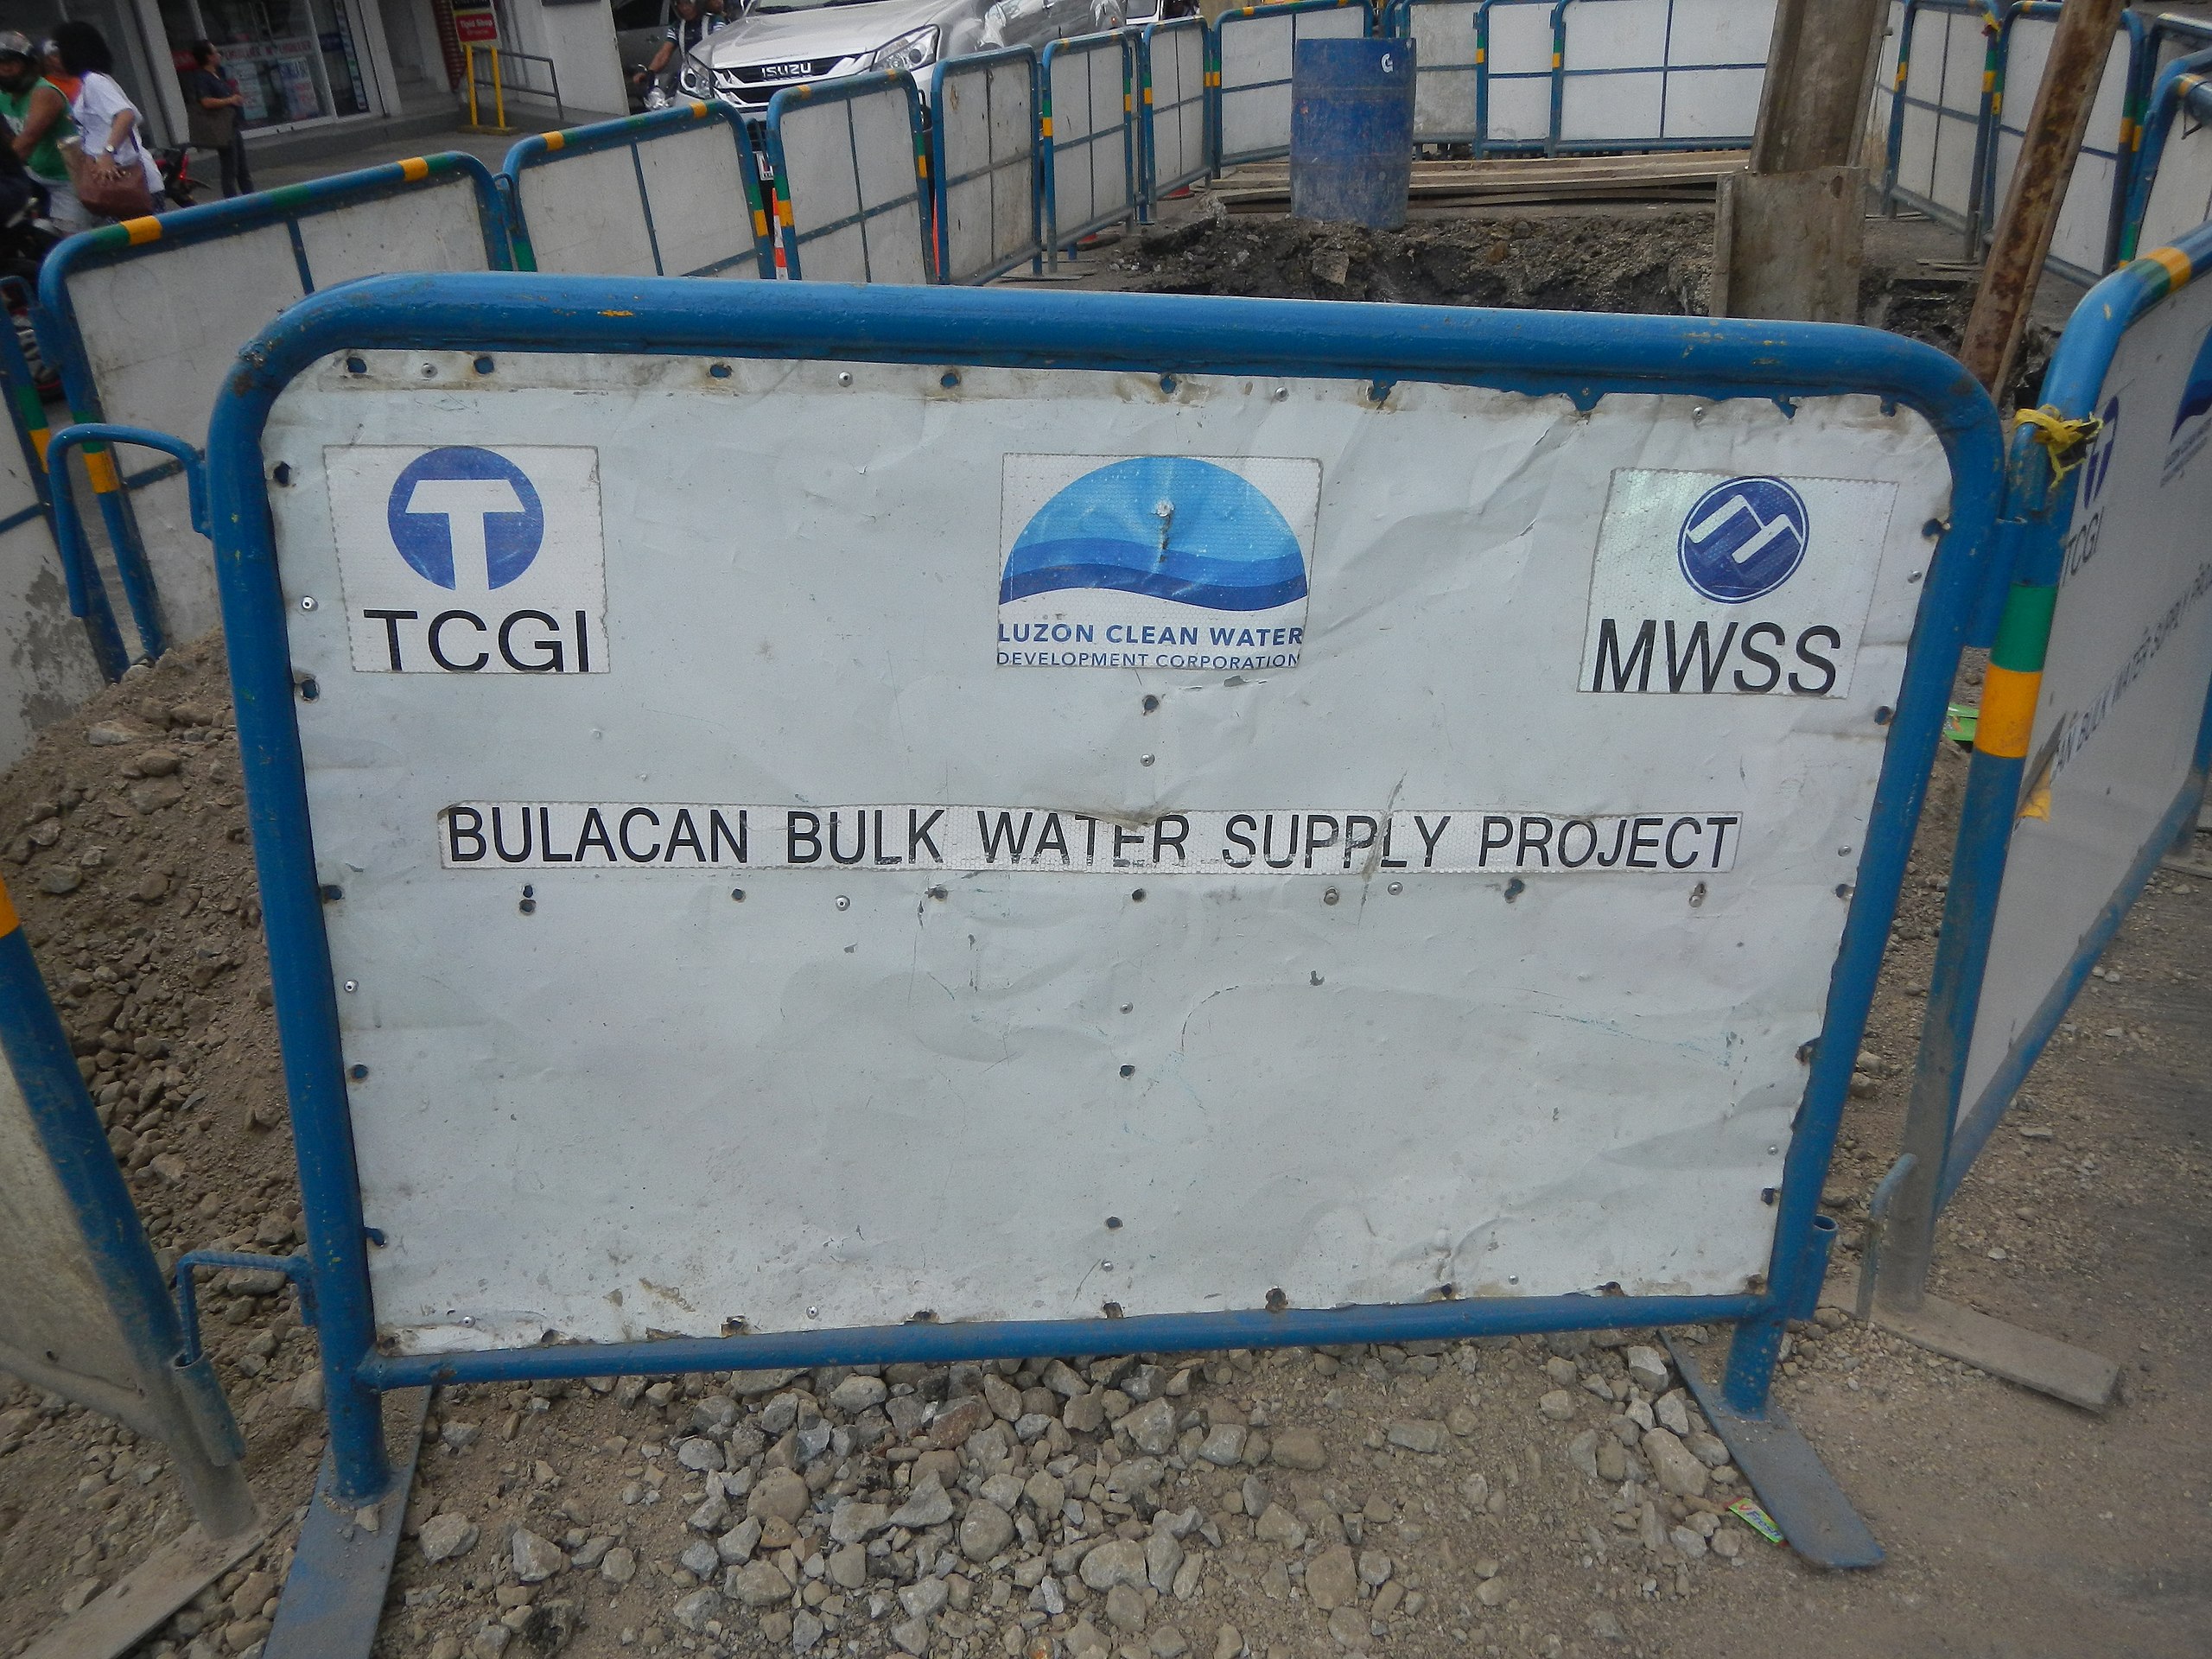 https://upload.wikimedia.org/wikipedia/commons/thumb/4/4e/9643Bulacan_Bulk_Water_Supply_Project_01.jpg/2560px-9643Bulacan_Bulk_Water_Supply_Project_01.jpg